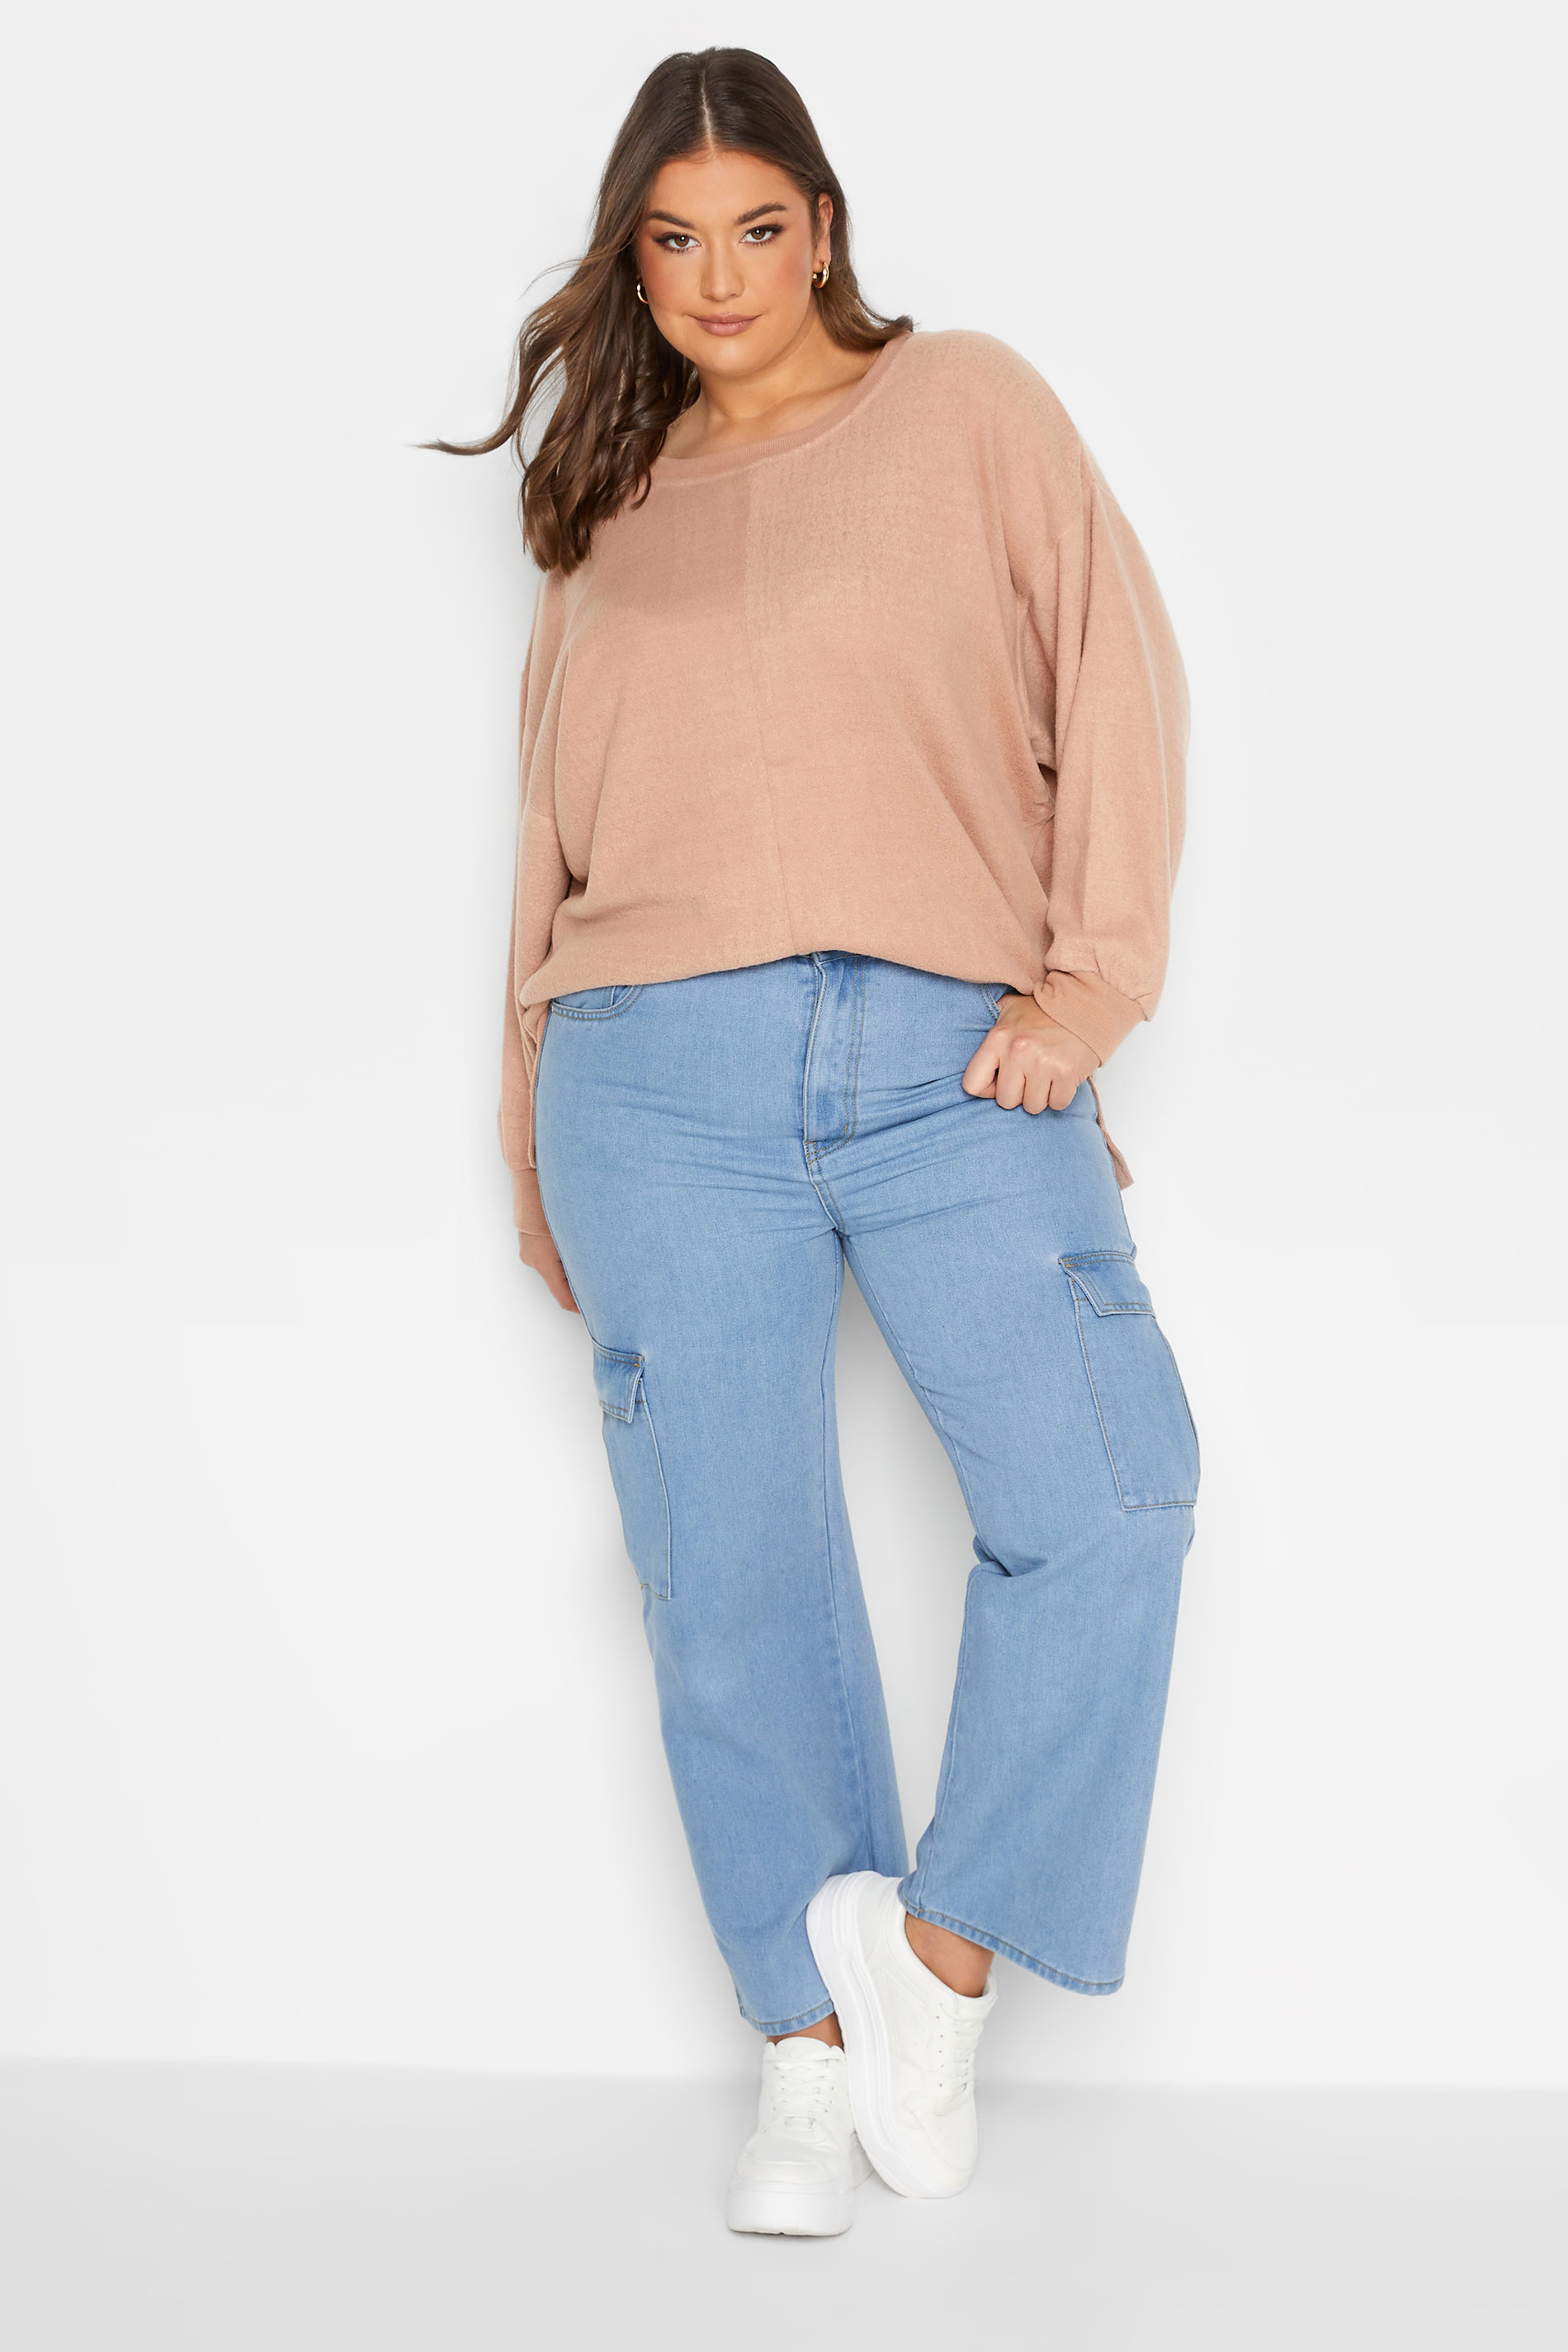 Plus Size Beige Brown Soft Touch Fleece Sweatshirt | Yours Clothing 2